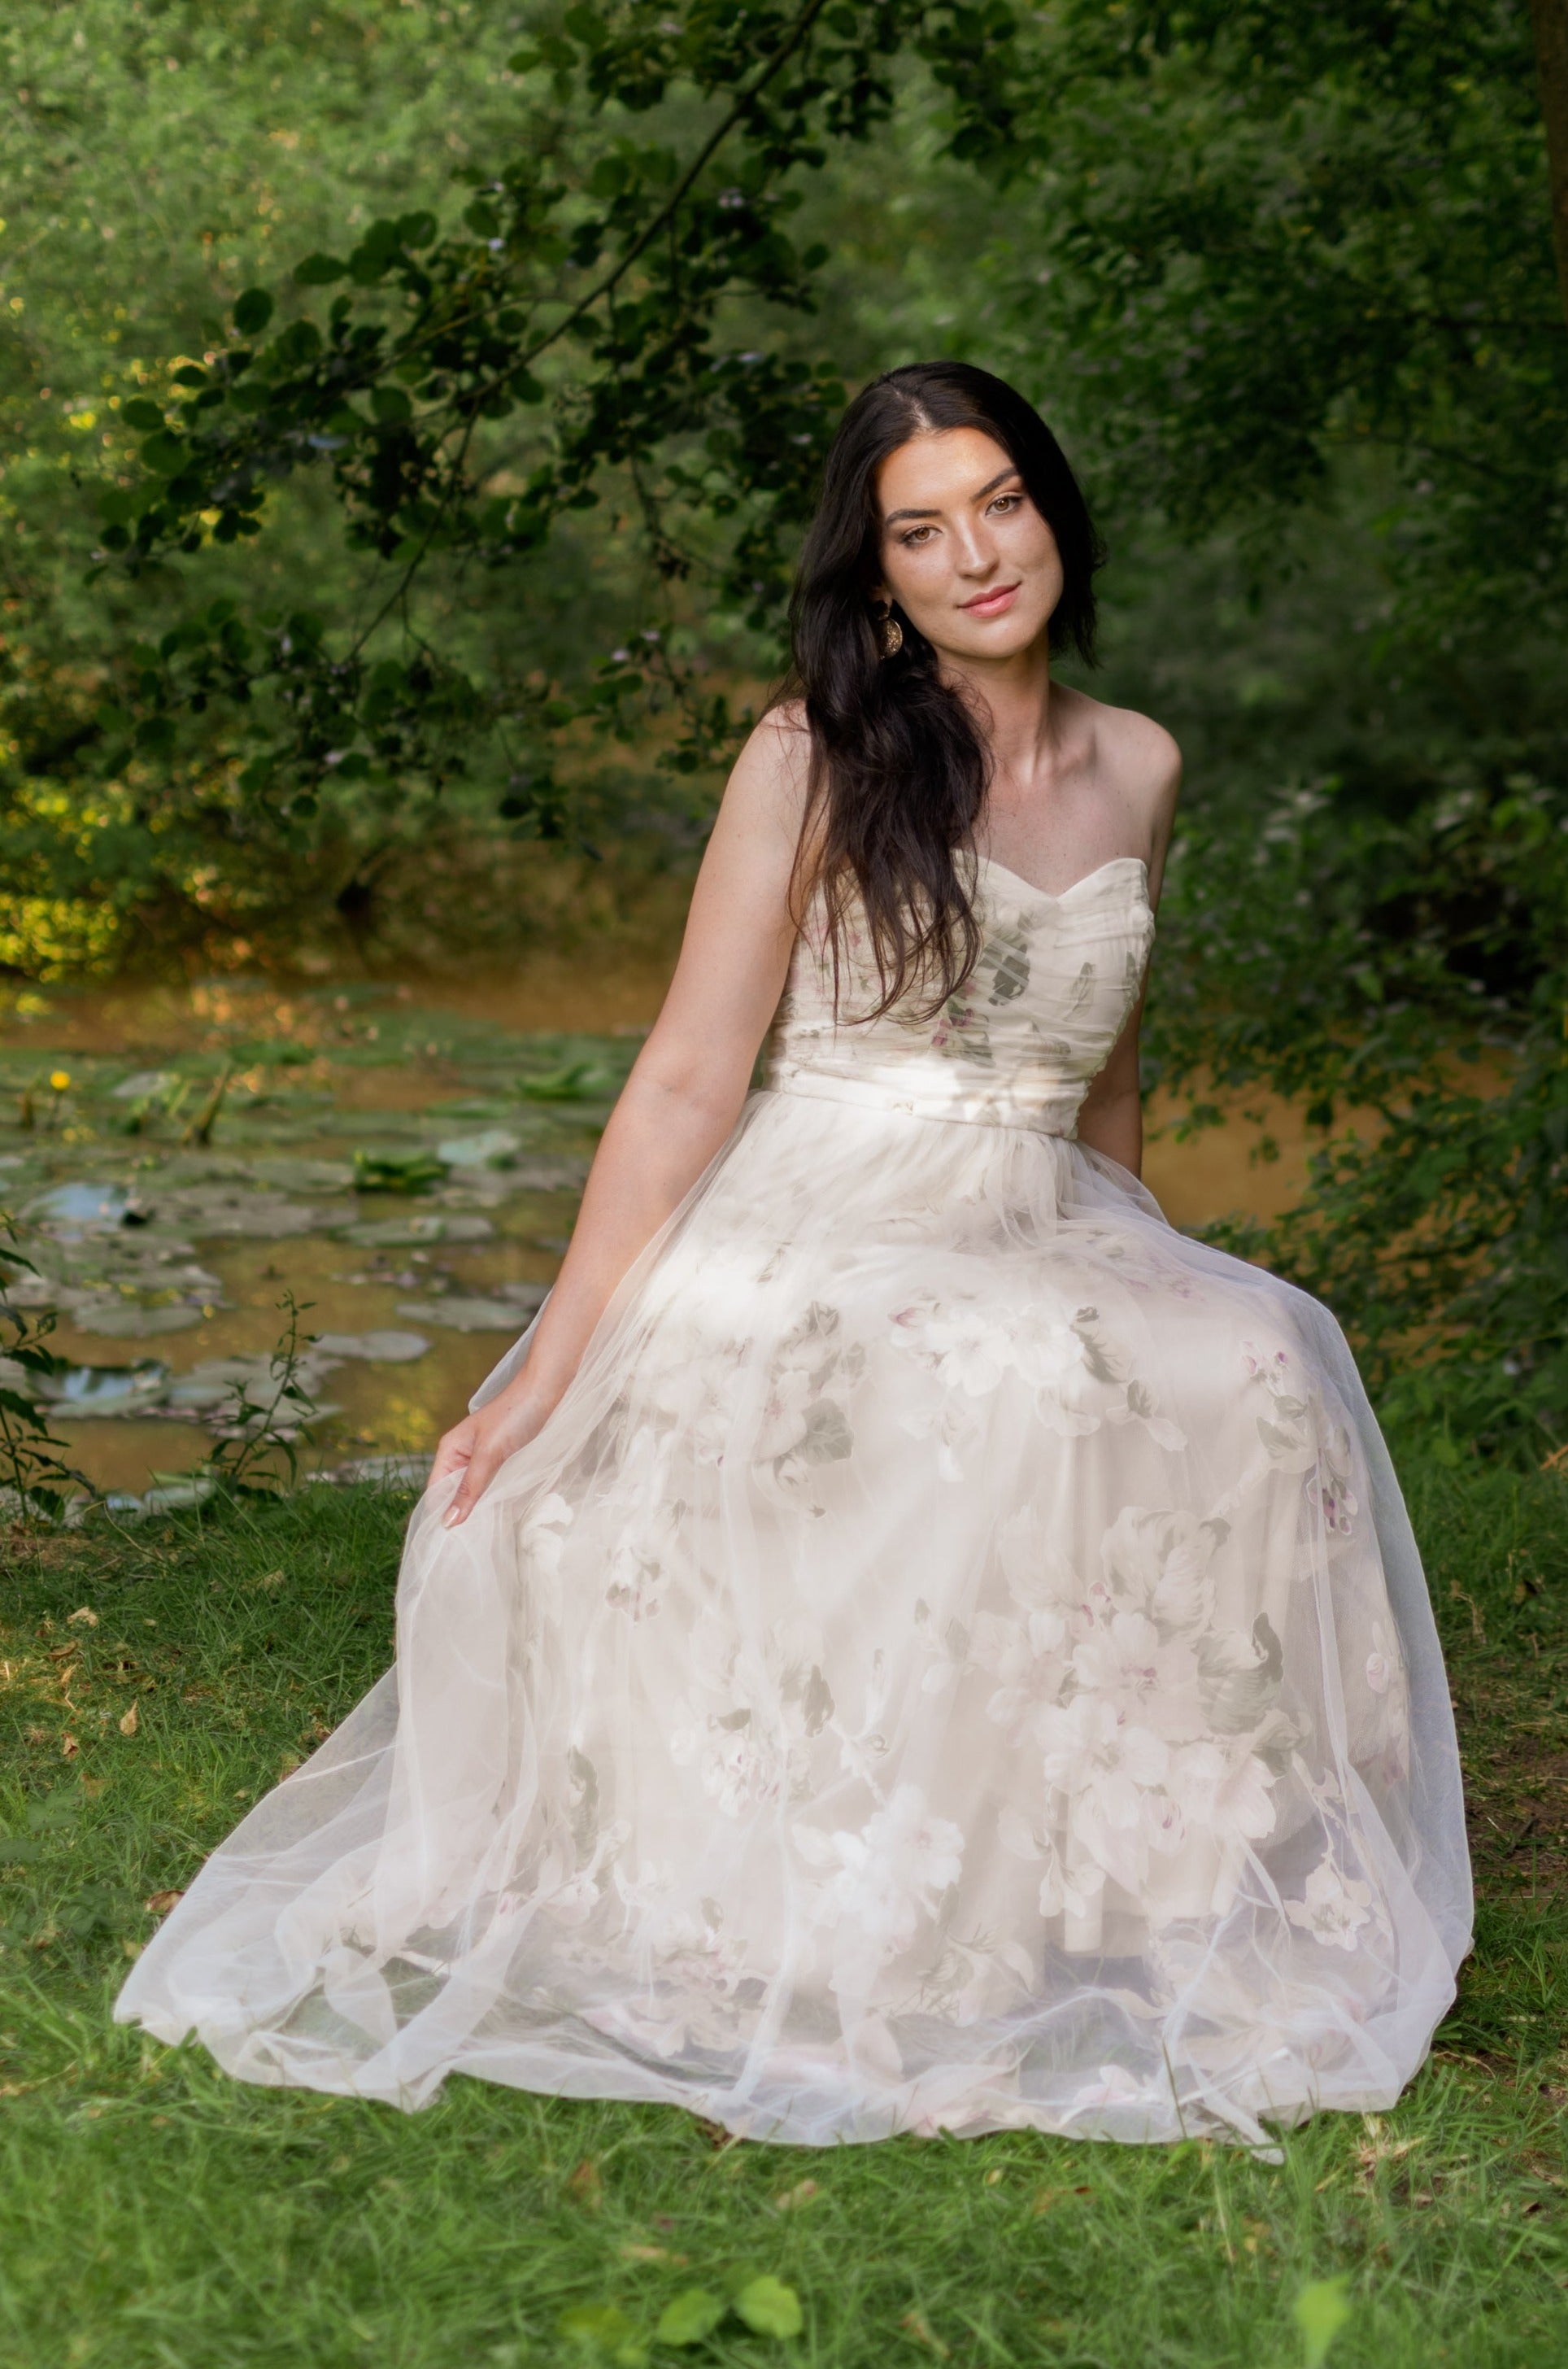 Fairy Tale Dress - Ivory White